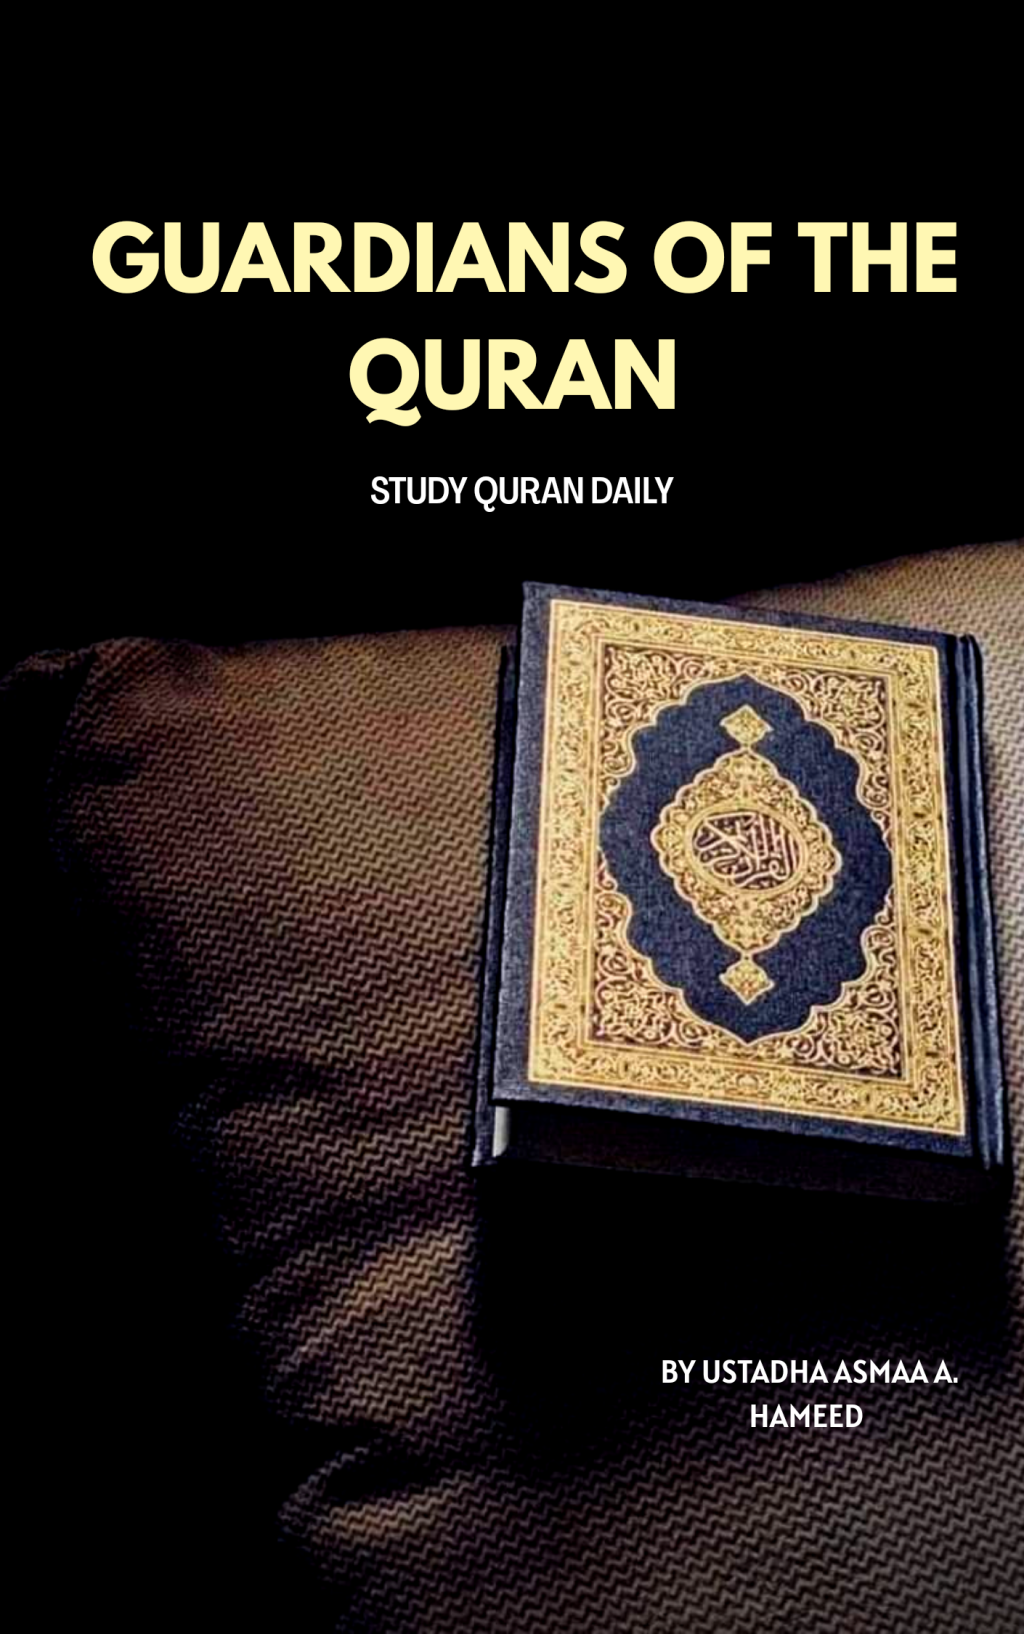 Book: Guardians of the Quran